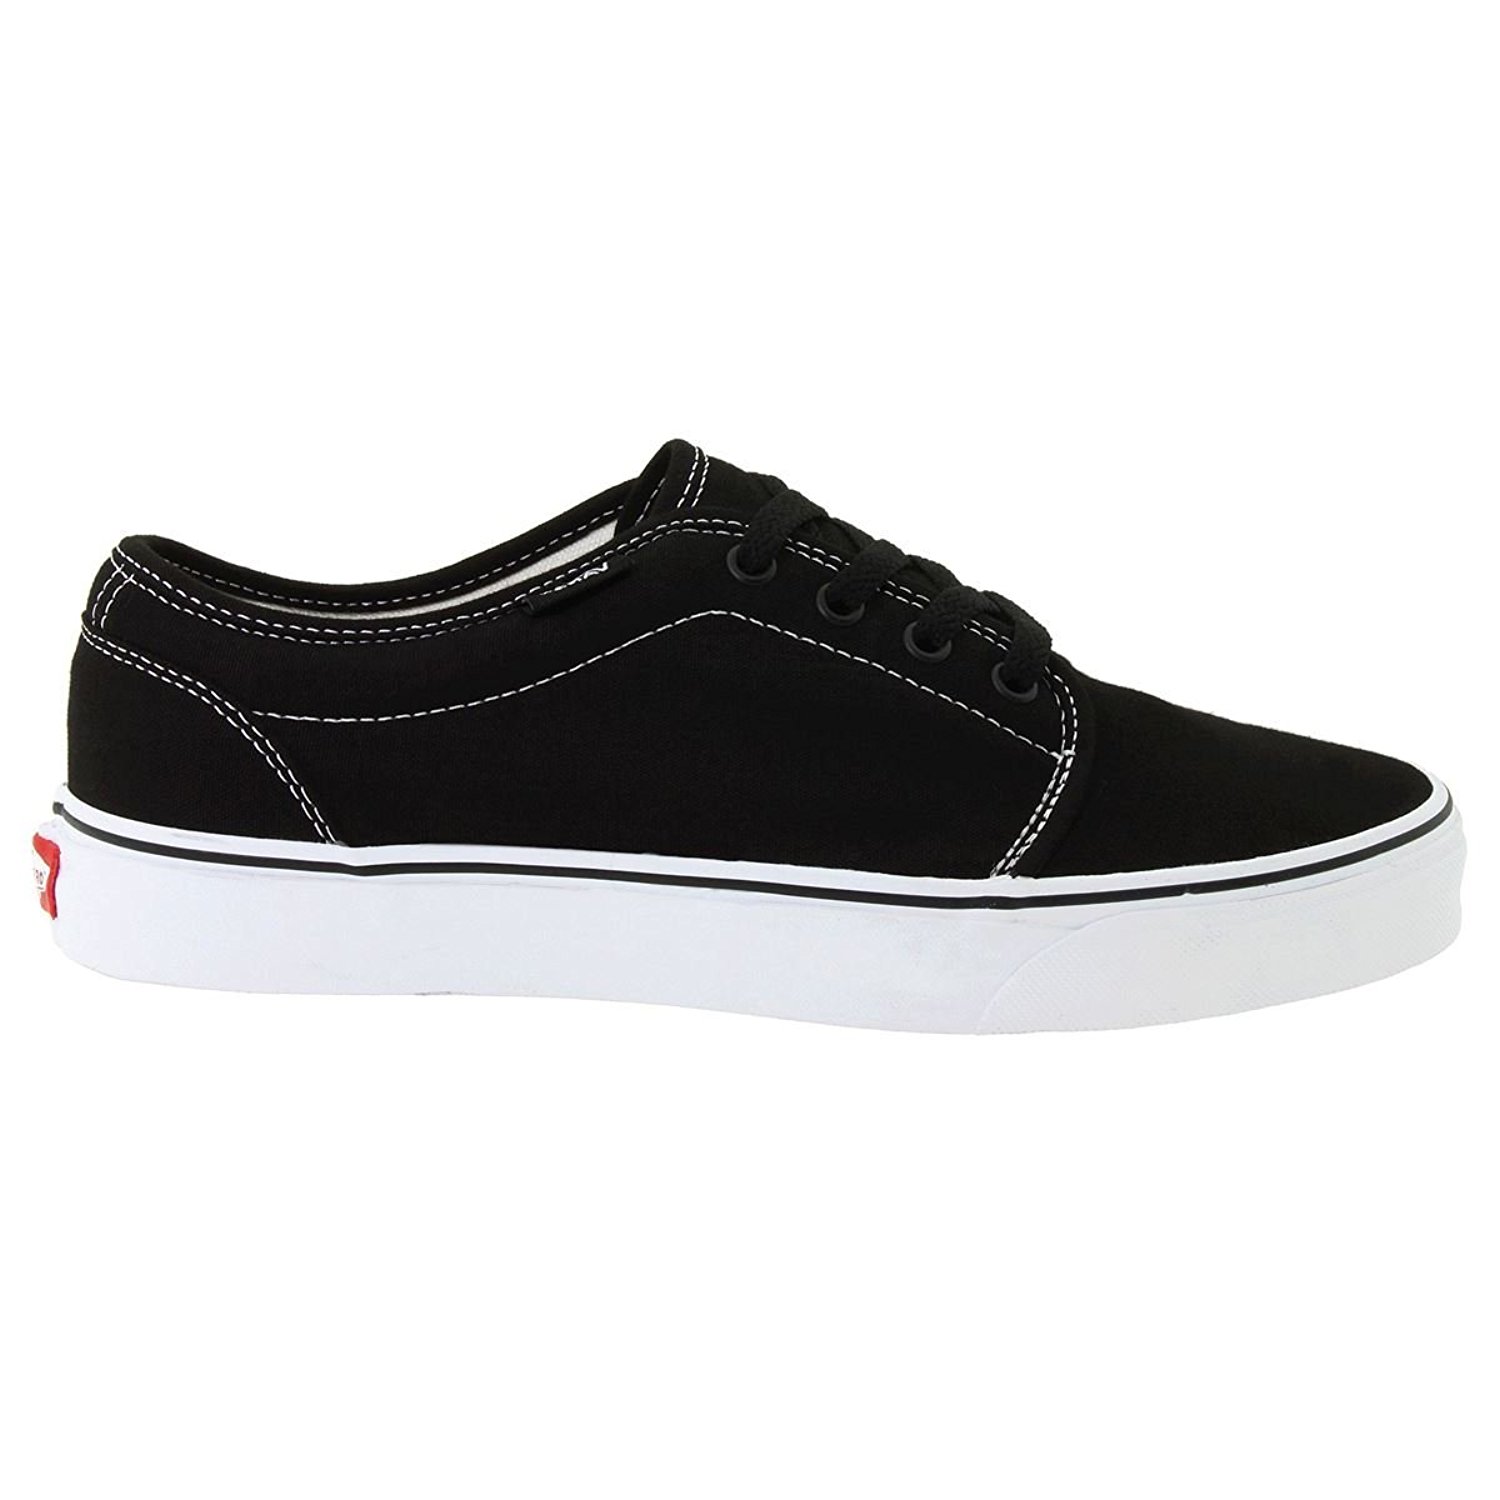 VANS 106 Vulcanized Kids/Youth Girls/Boys Shoes Black/White - image 1 of 5